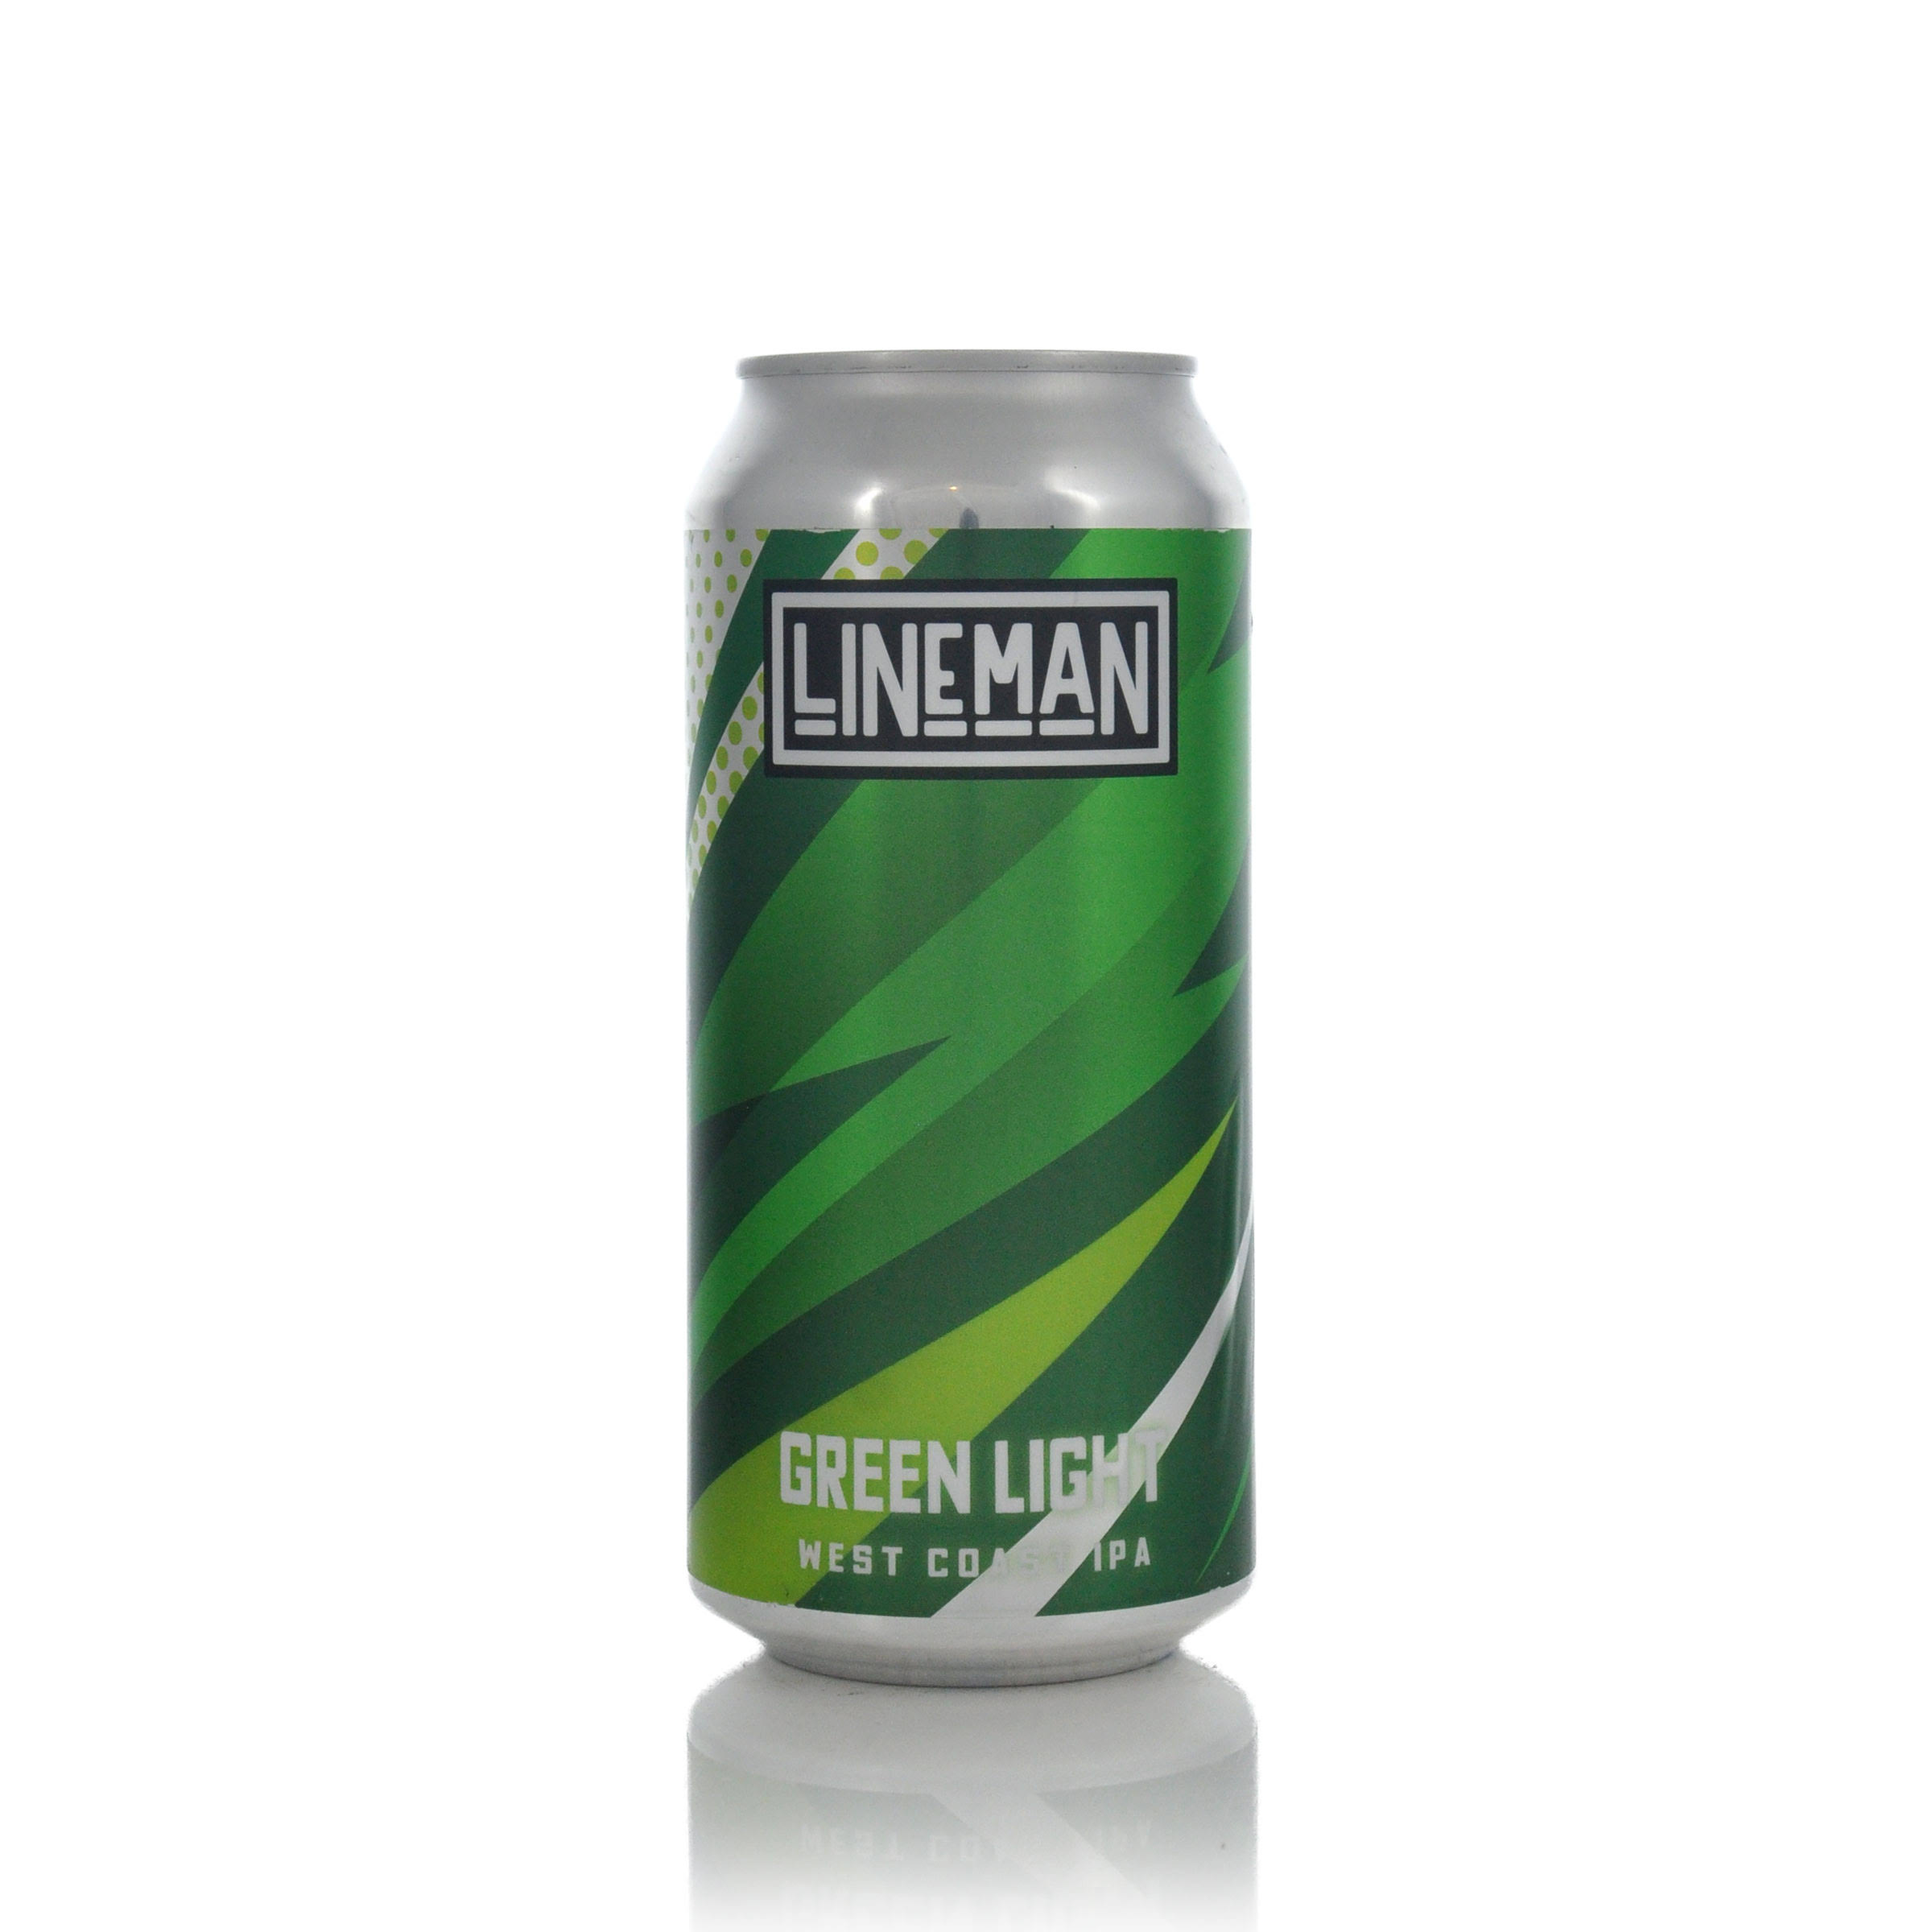 Lineman Green Light West Coast IPA 7.0% ABV